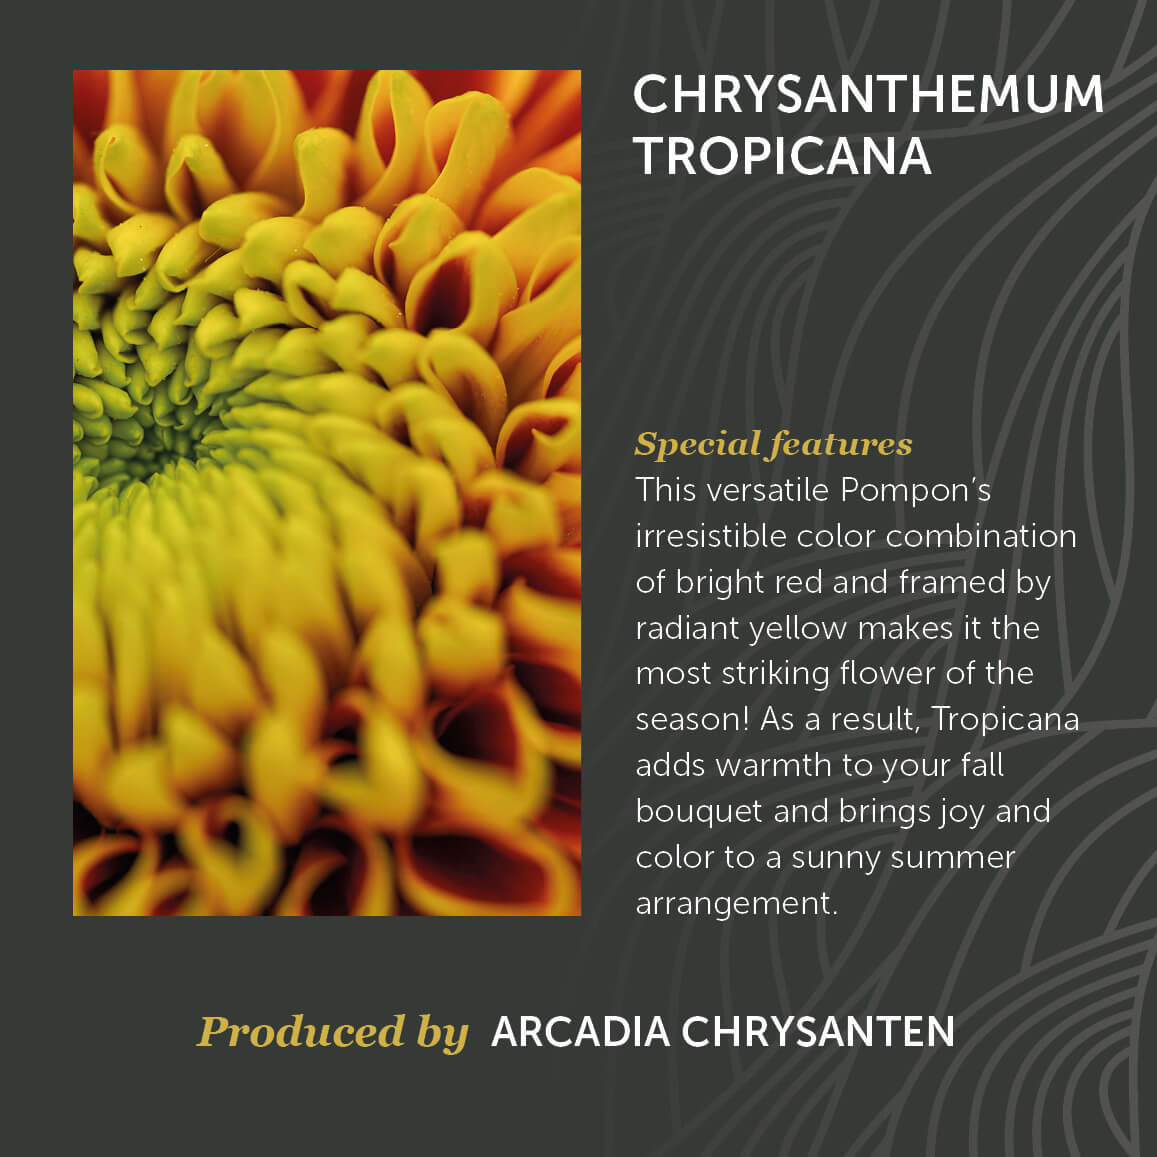 Chrysanthemum Tropicana